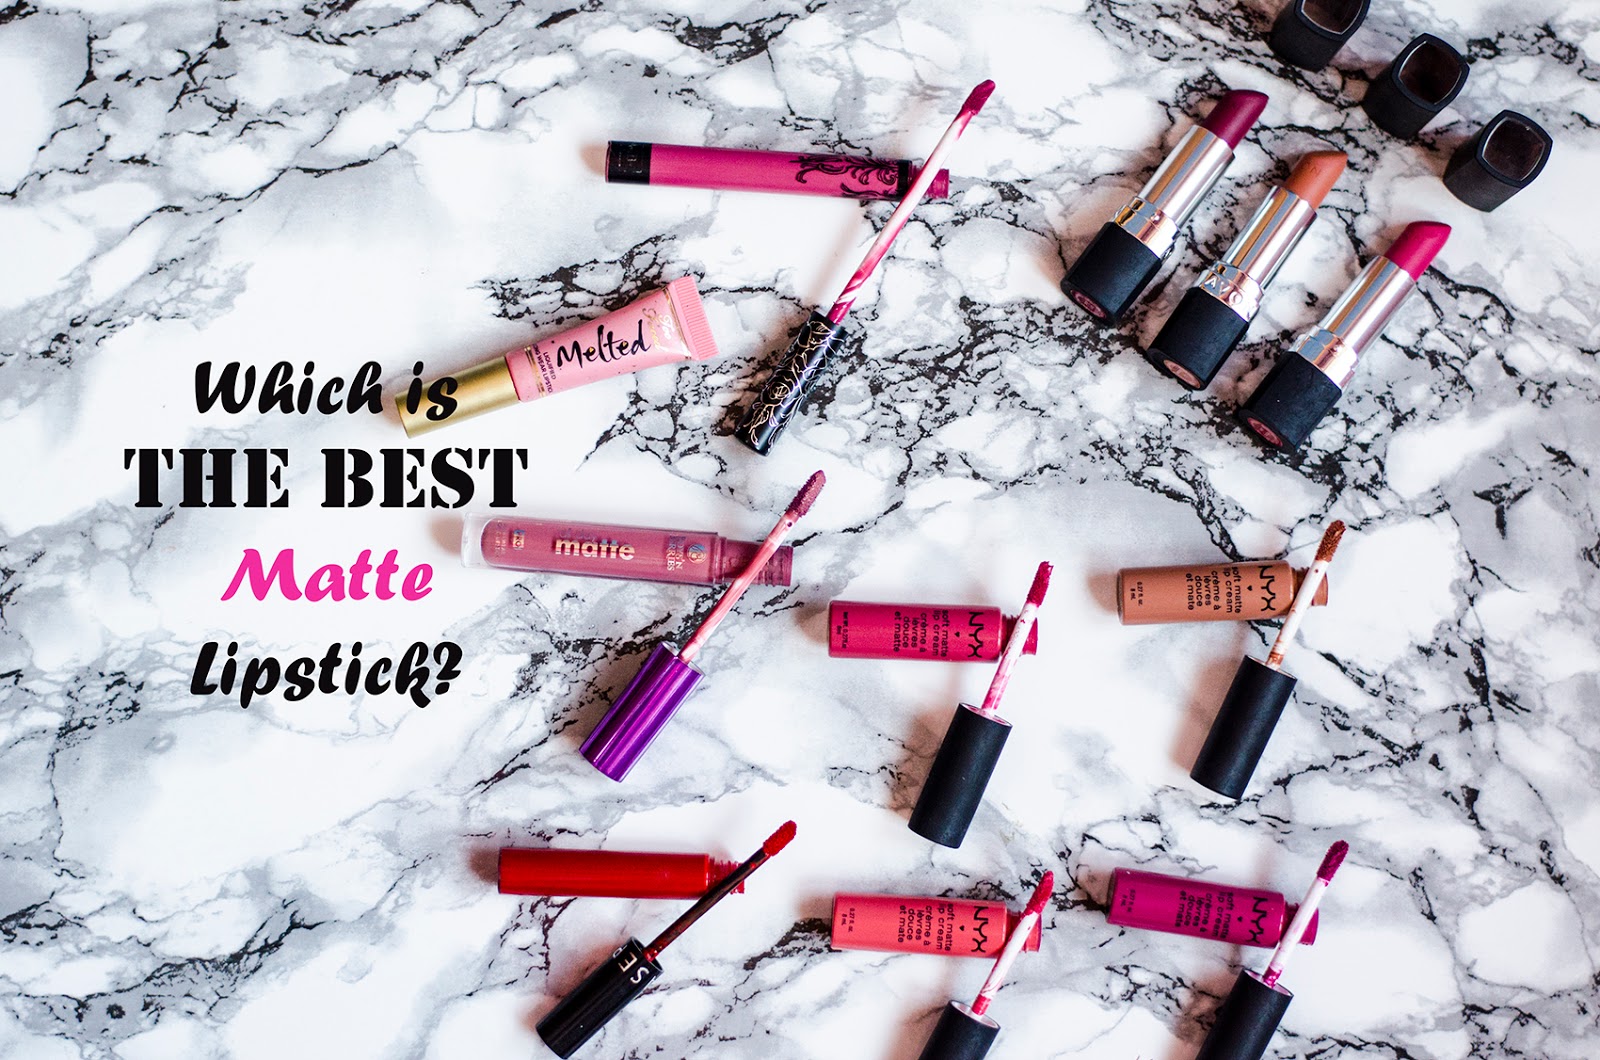 Which is the best matte lipstick?